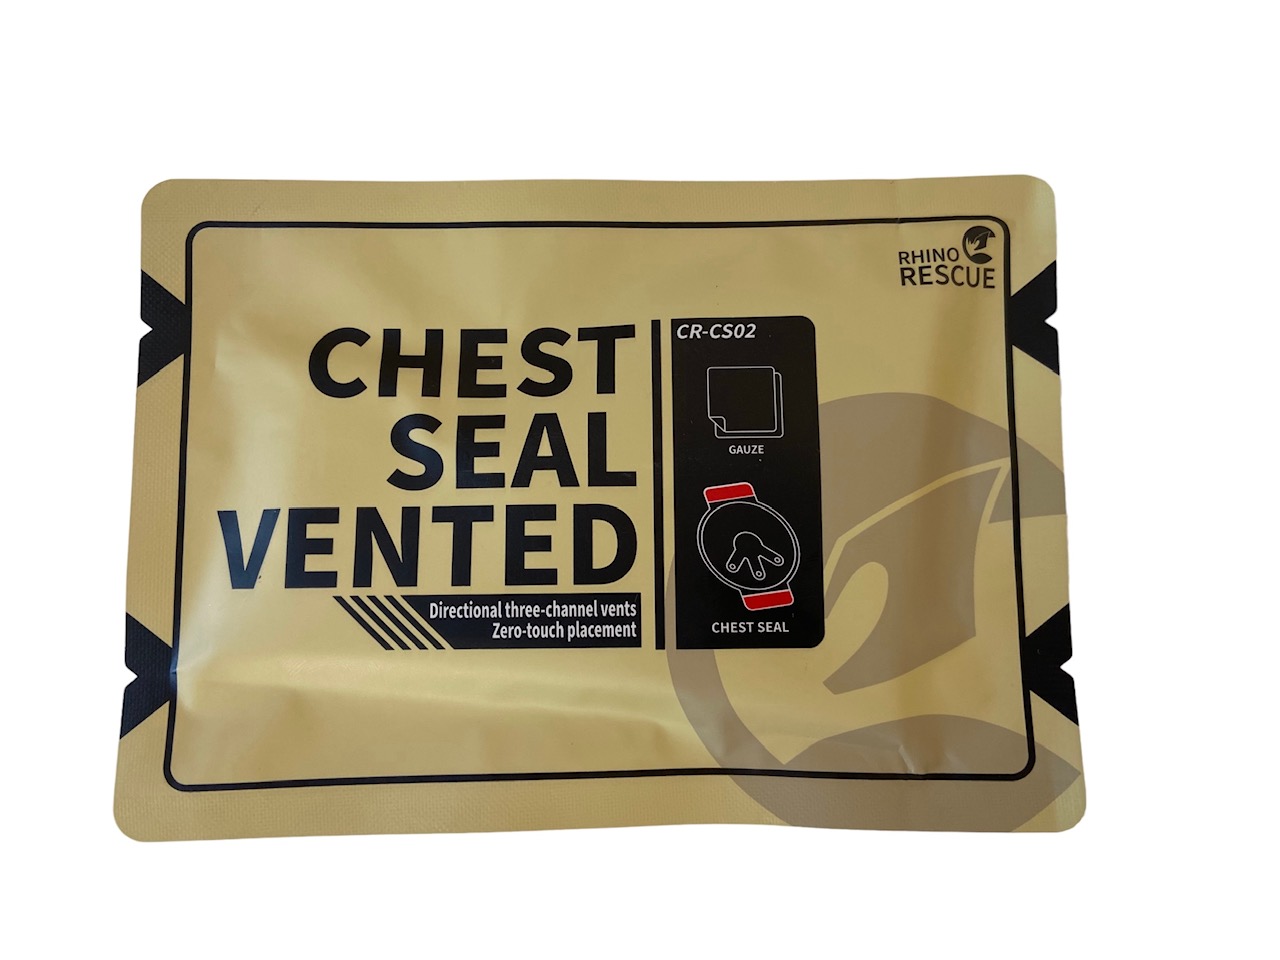 Chest Seal VENTED – opatrunek wentylowy